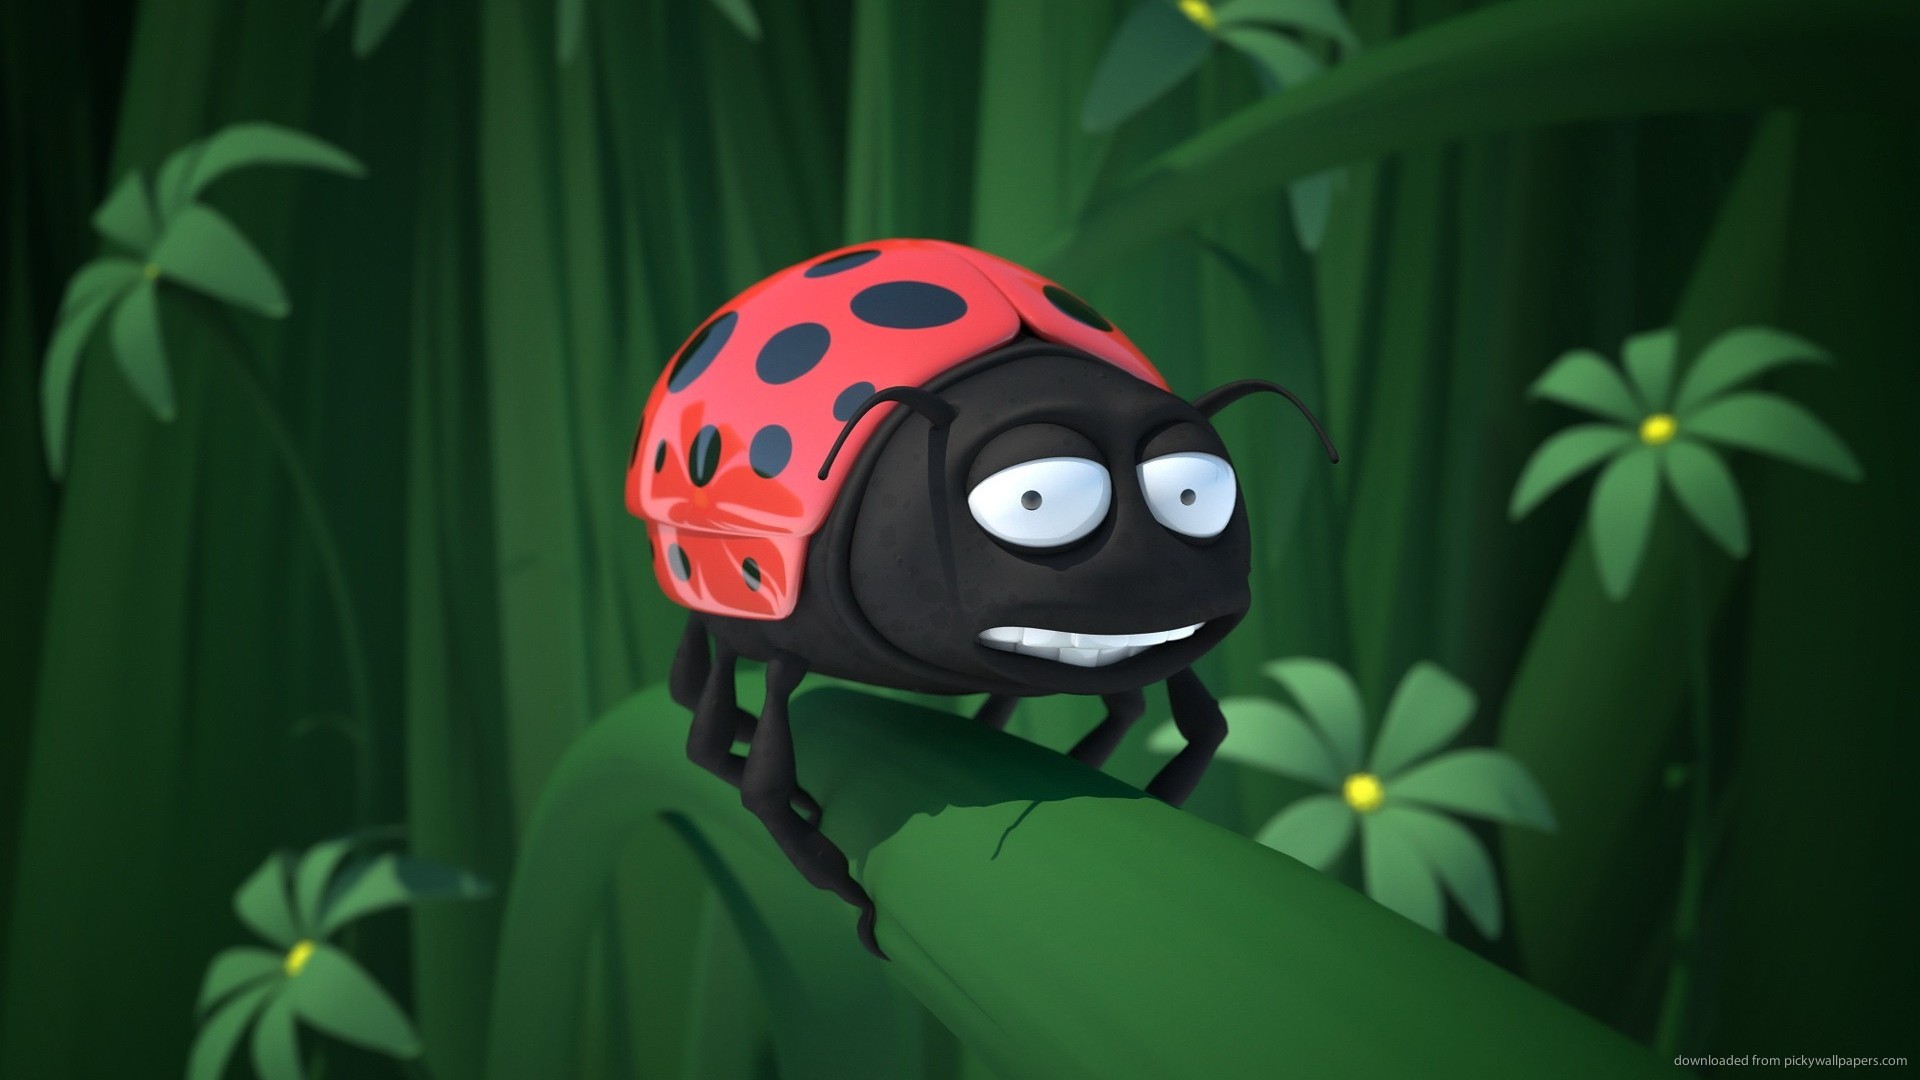 Download 1920x1080 Cartoon 3D Ladybug Wallpaper